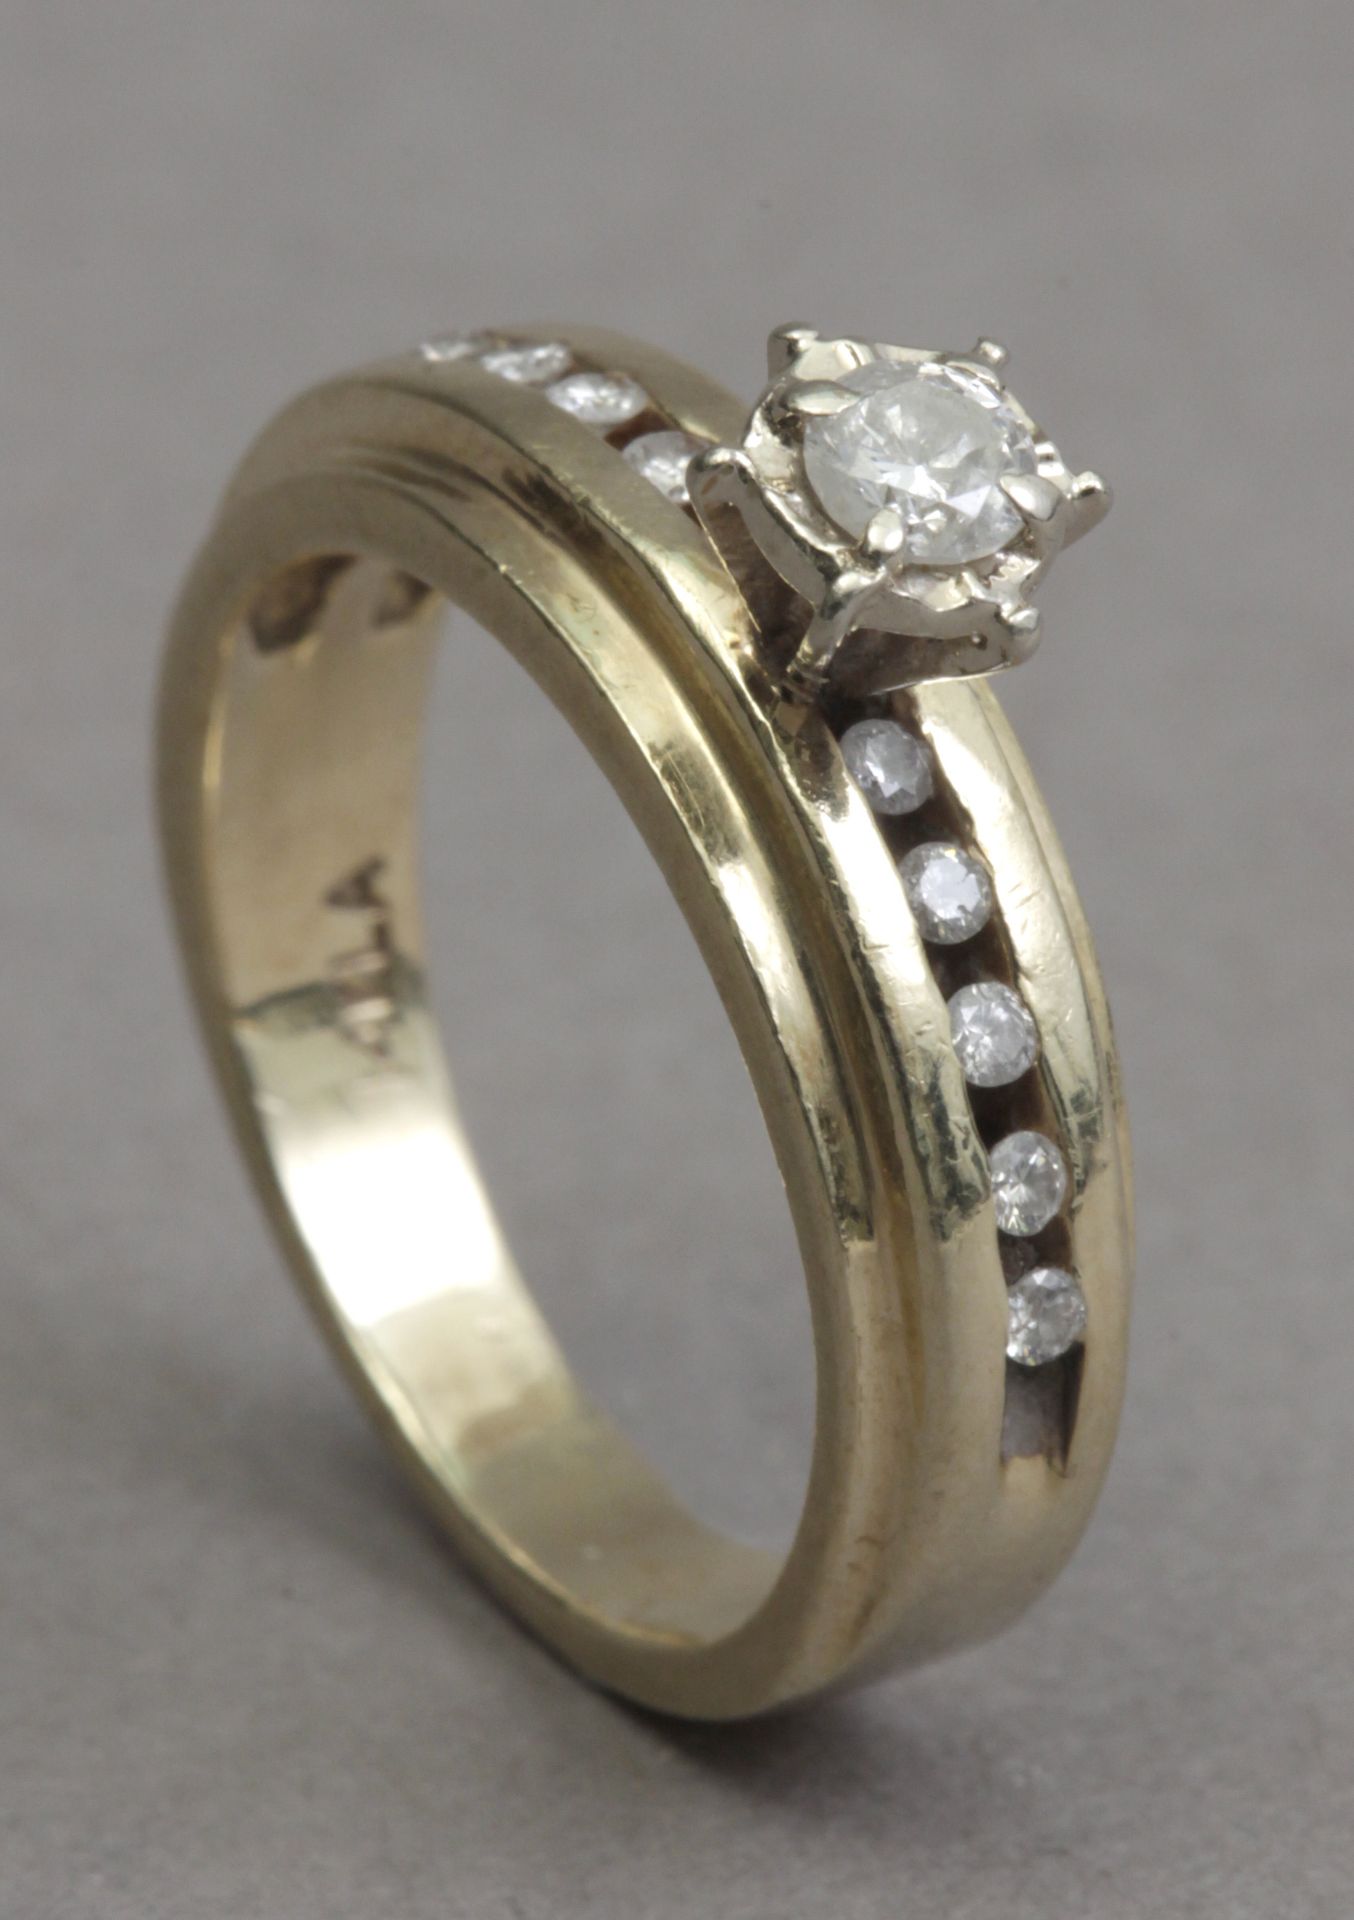 A diamond engagement ring